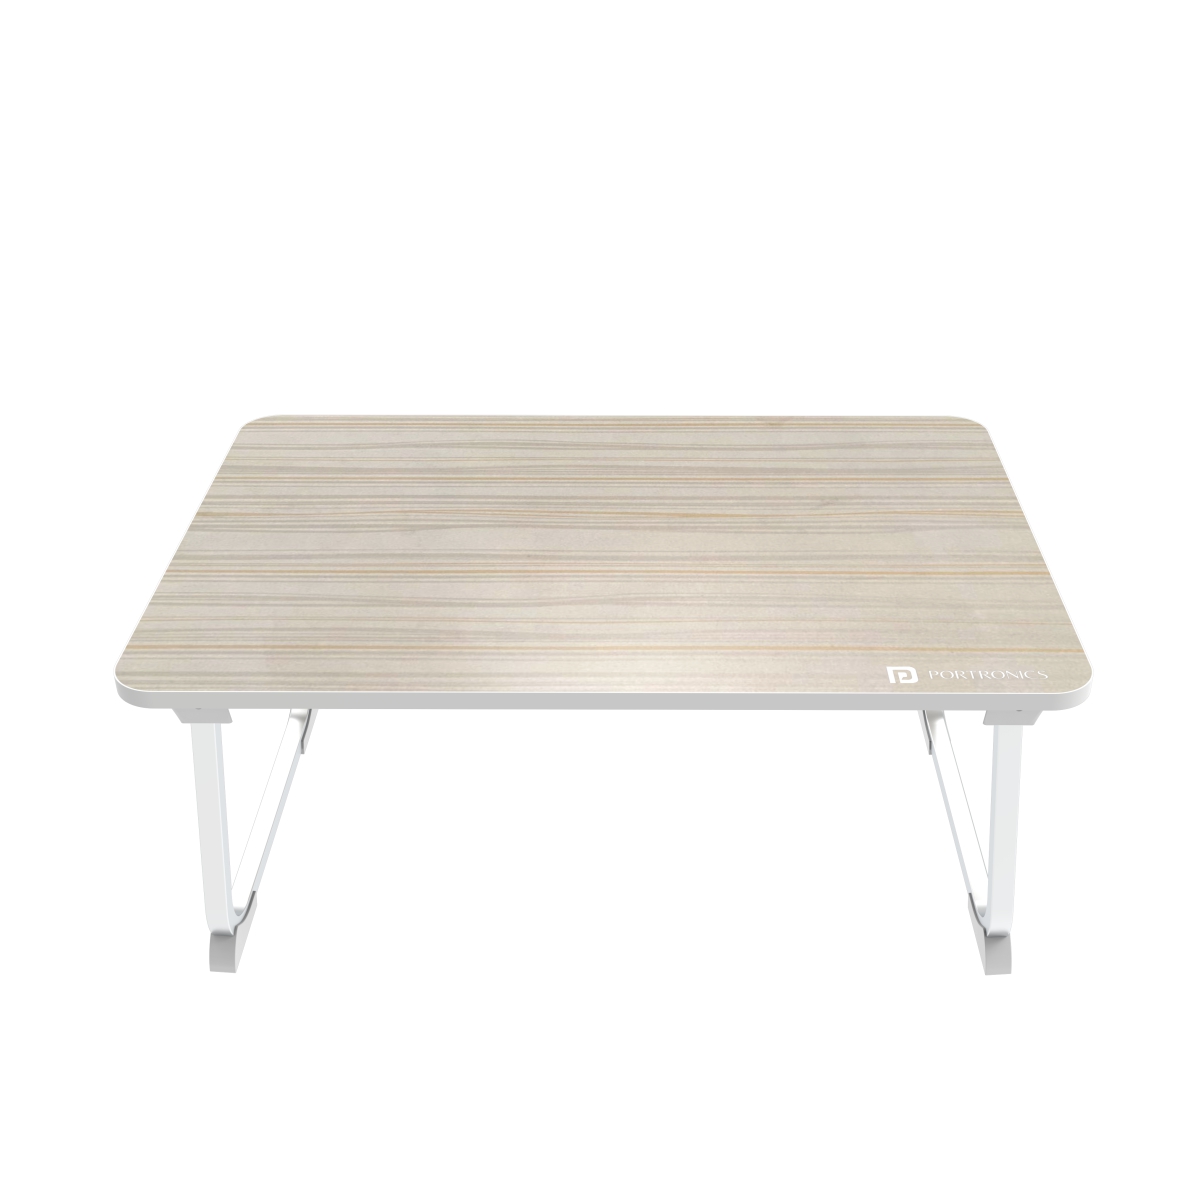 Portronics:My Buddy J - Multipurpose Movable & Adjustable Table, Grey,(POR 1820)